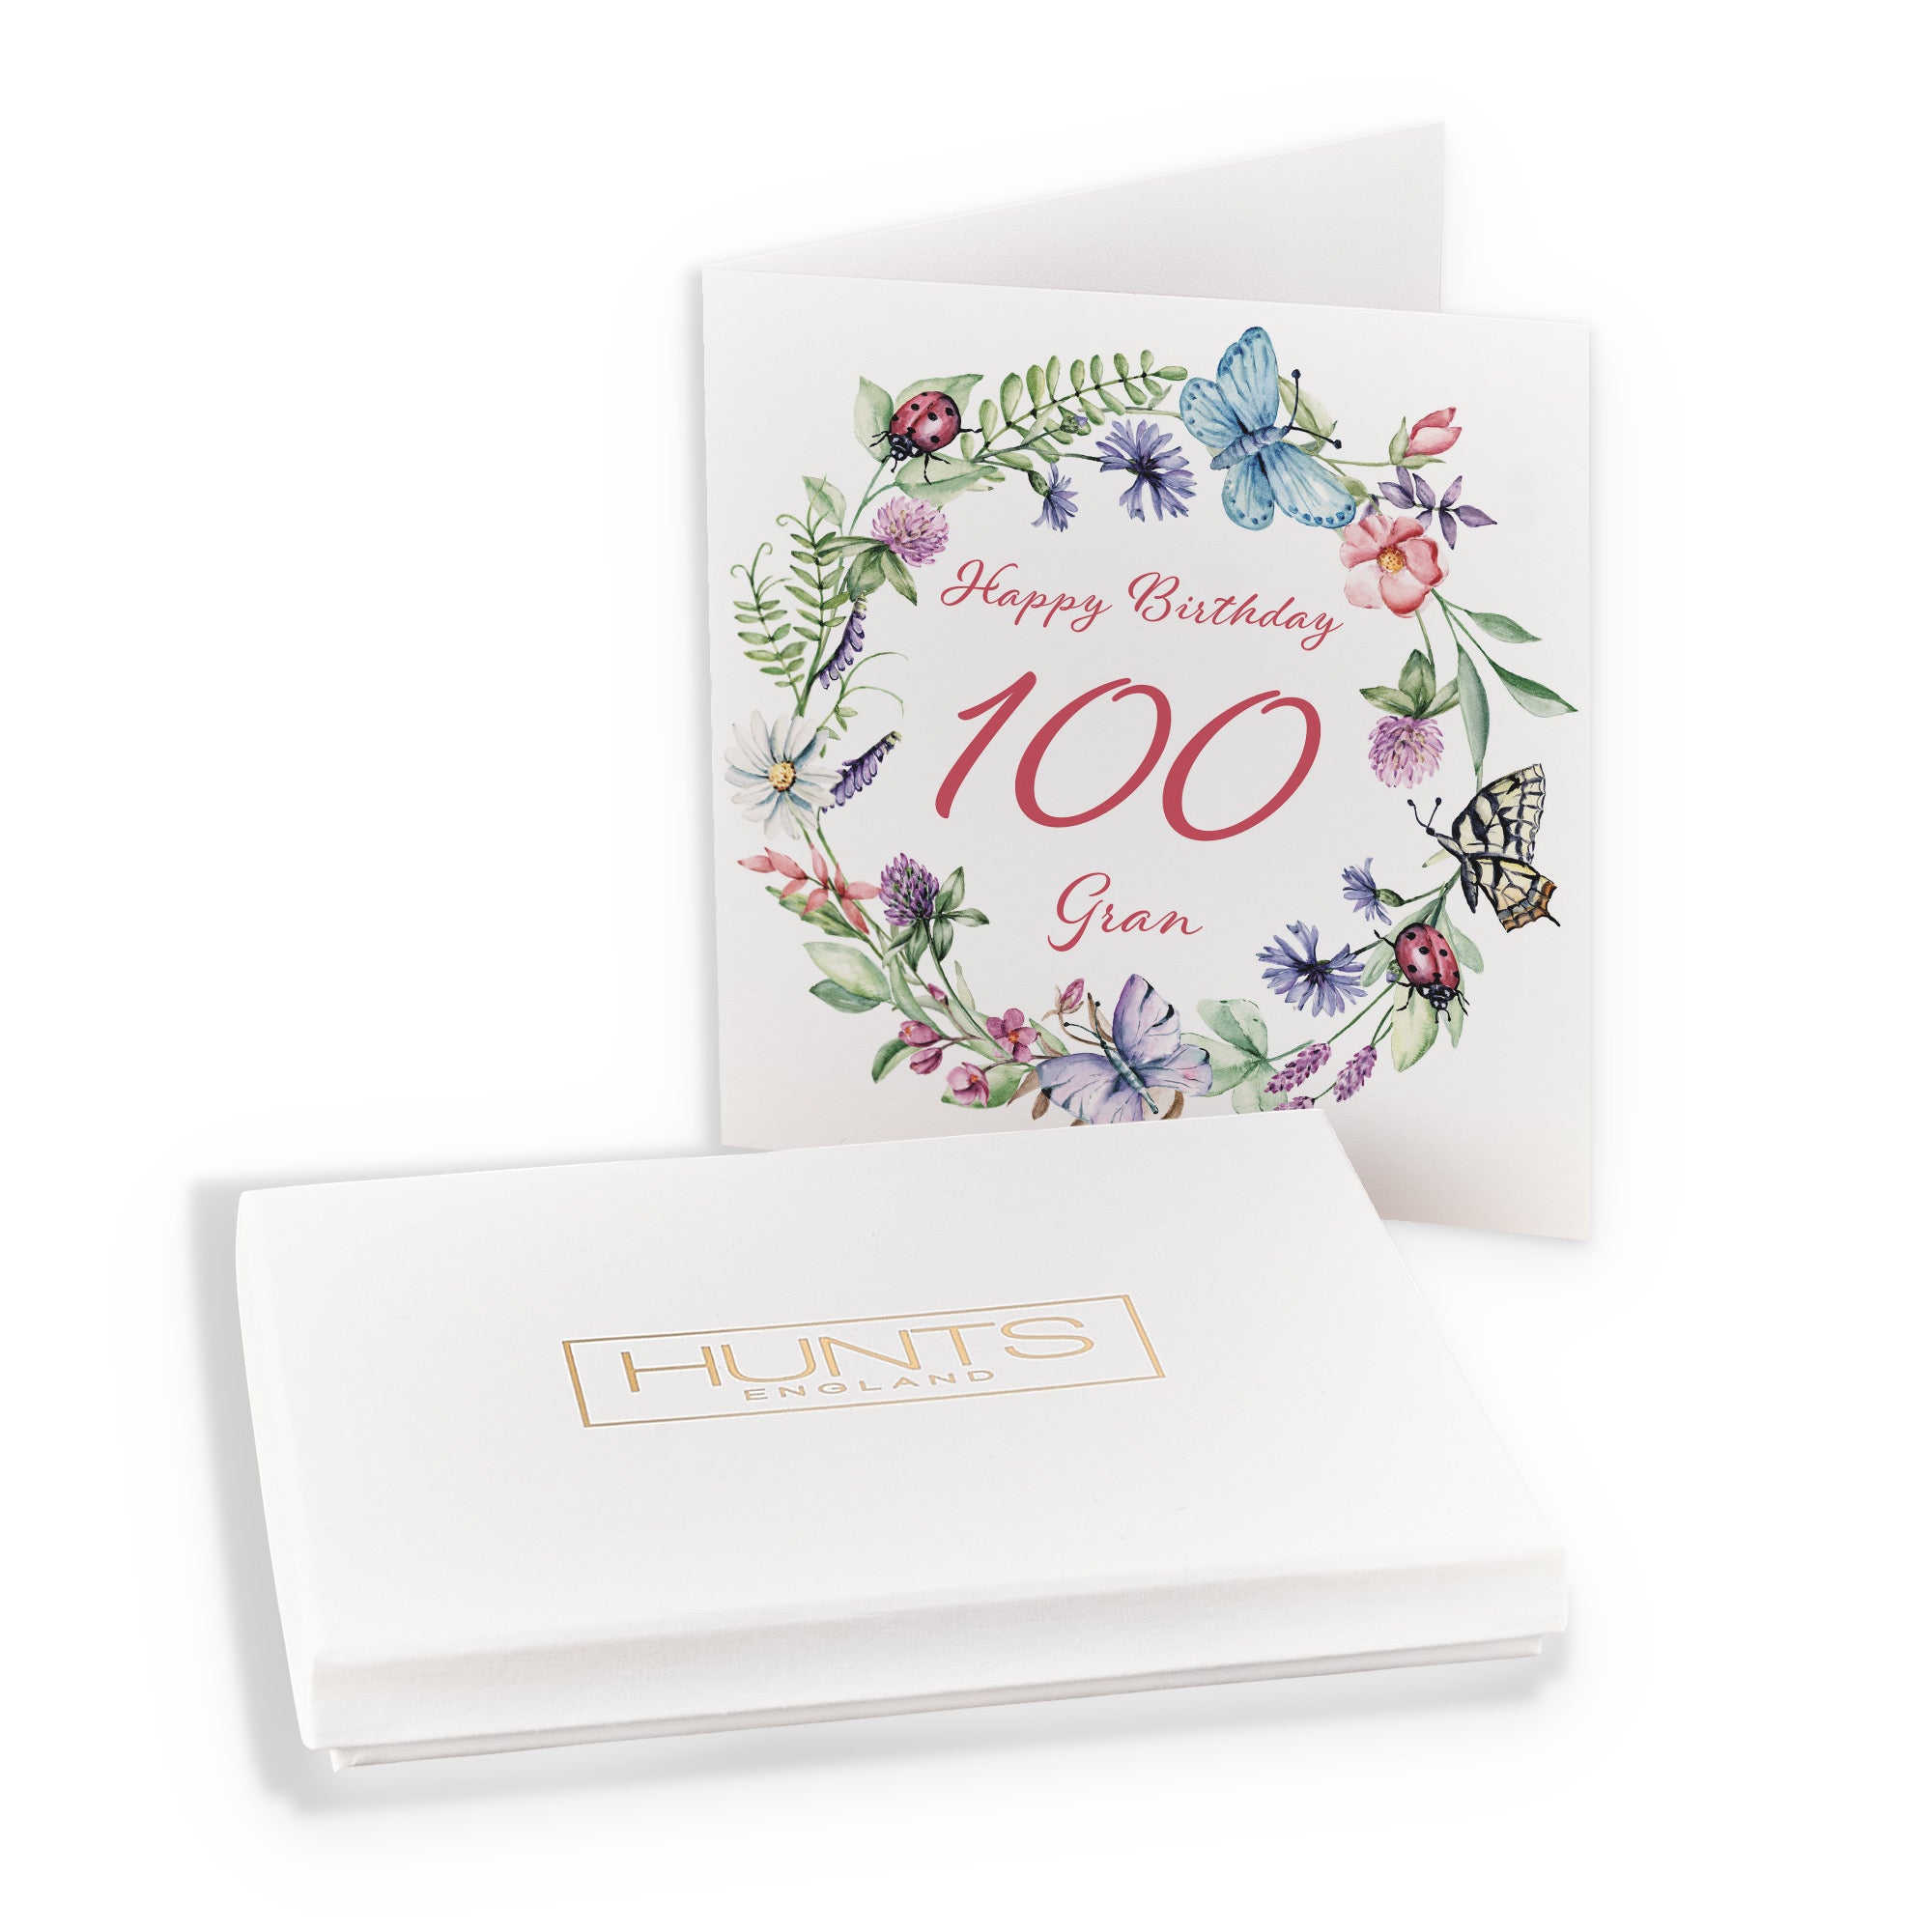 Boxed 100th Gran Birthday Card Meadow - Default Title (B0D5S8W86W)